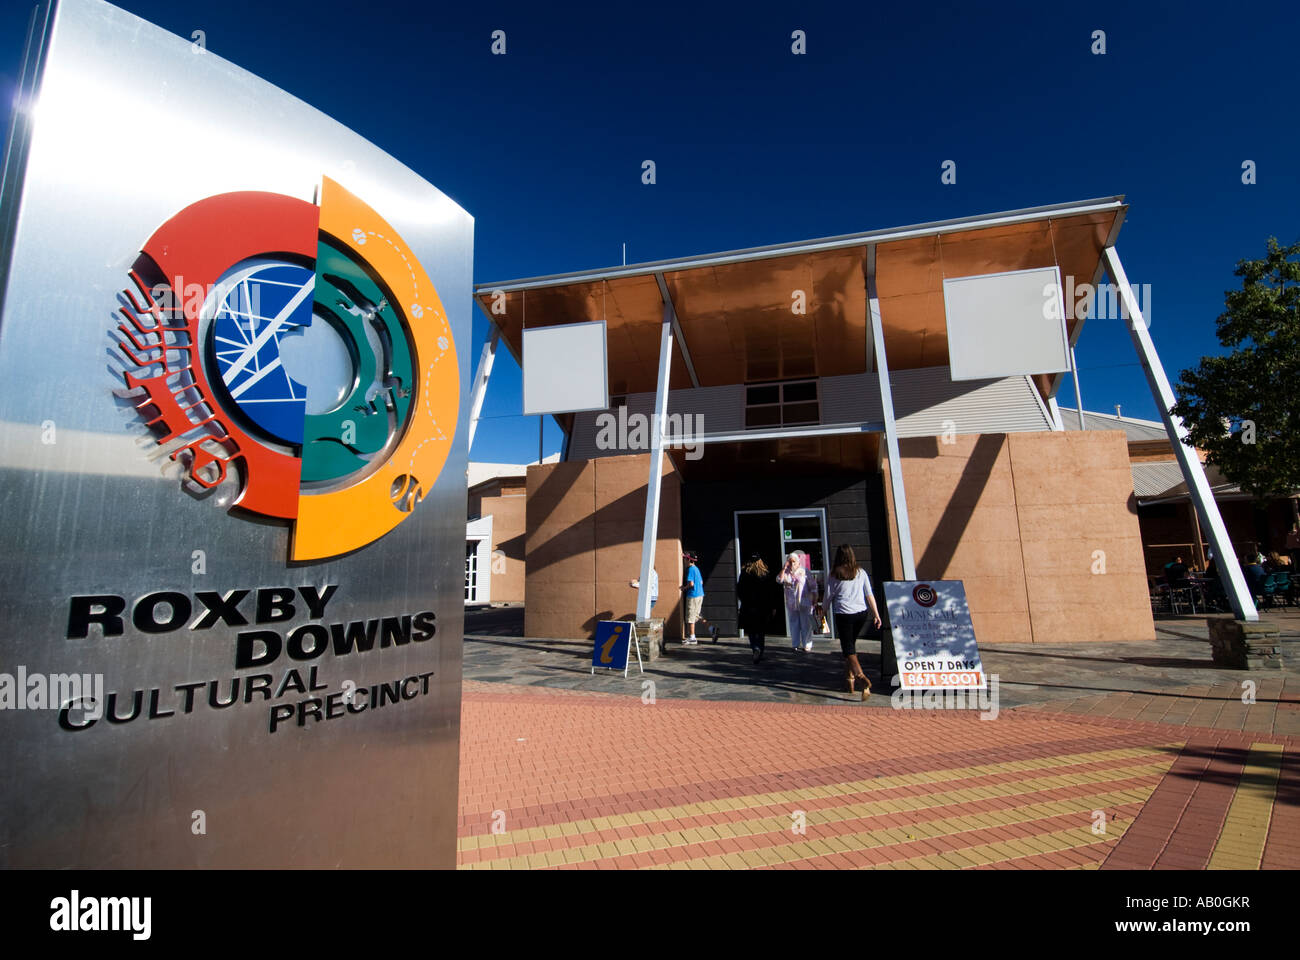 Cultural Precinct in central Roxby Downs South Australia 2007 Stock Photo